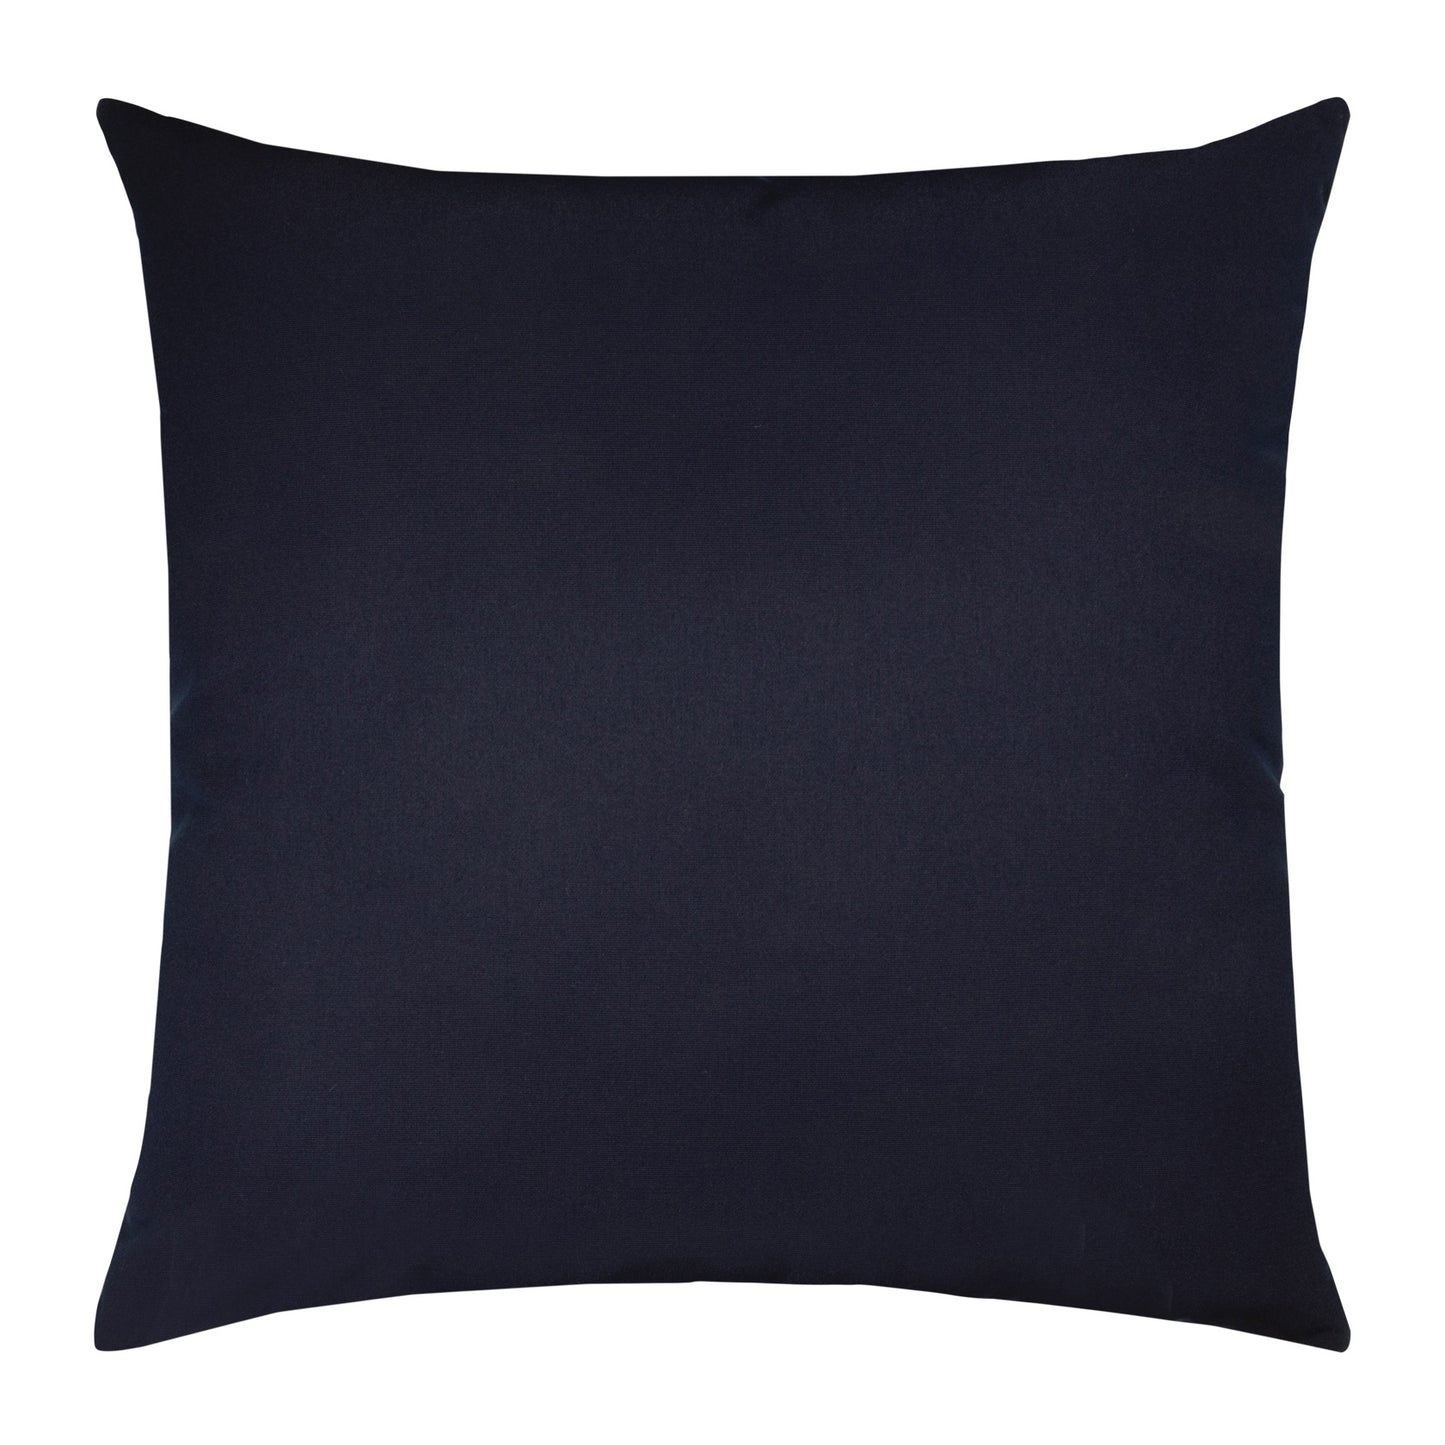 20" Square Elaine Smith Pillow  Canvas Navy